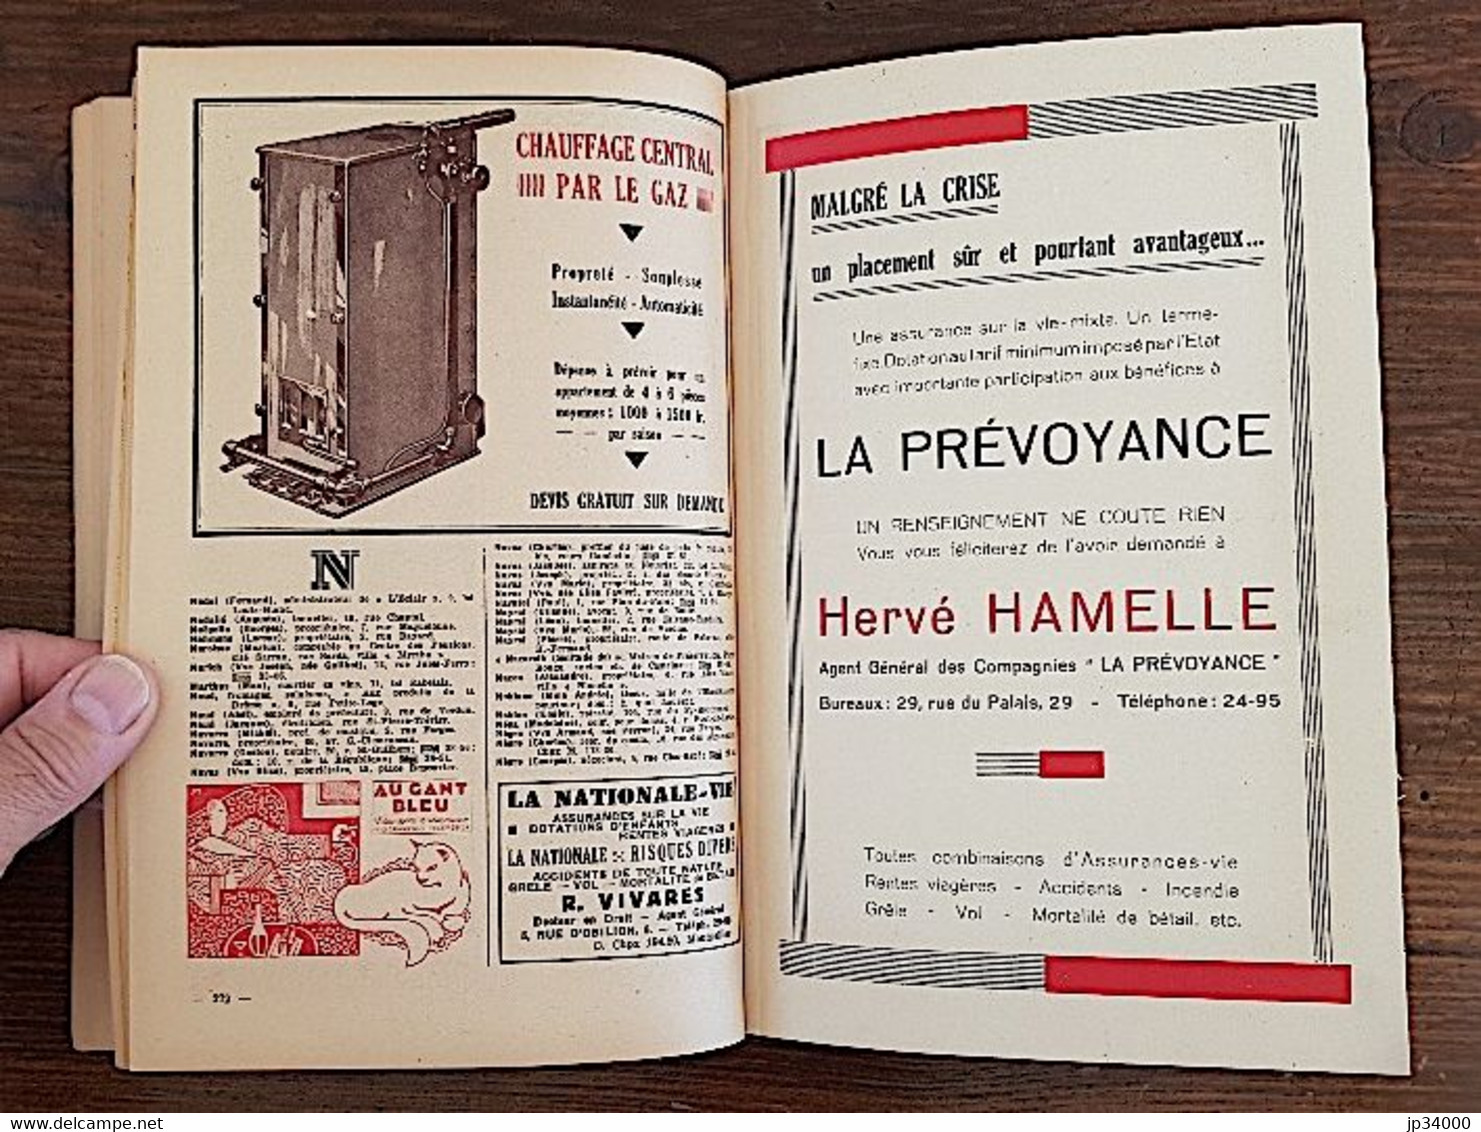 MONTPELLIER ADRESSES 1934 (9 eme édition) Languedoc, occitanie, Montpellier)TBE